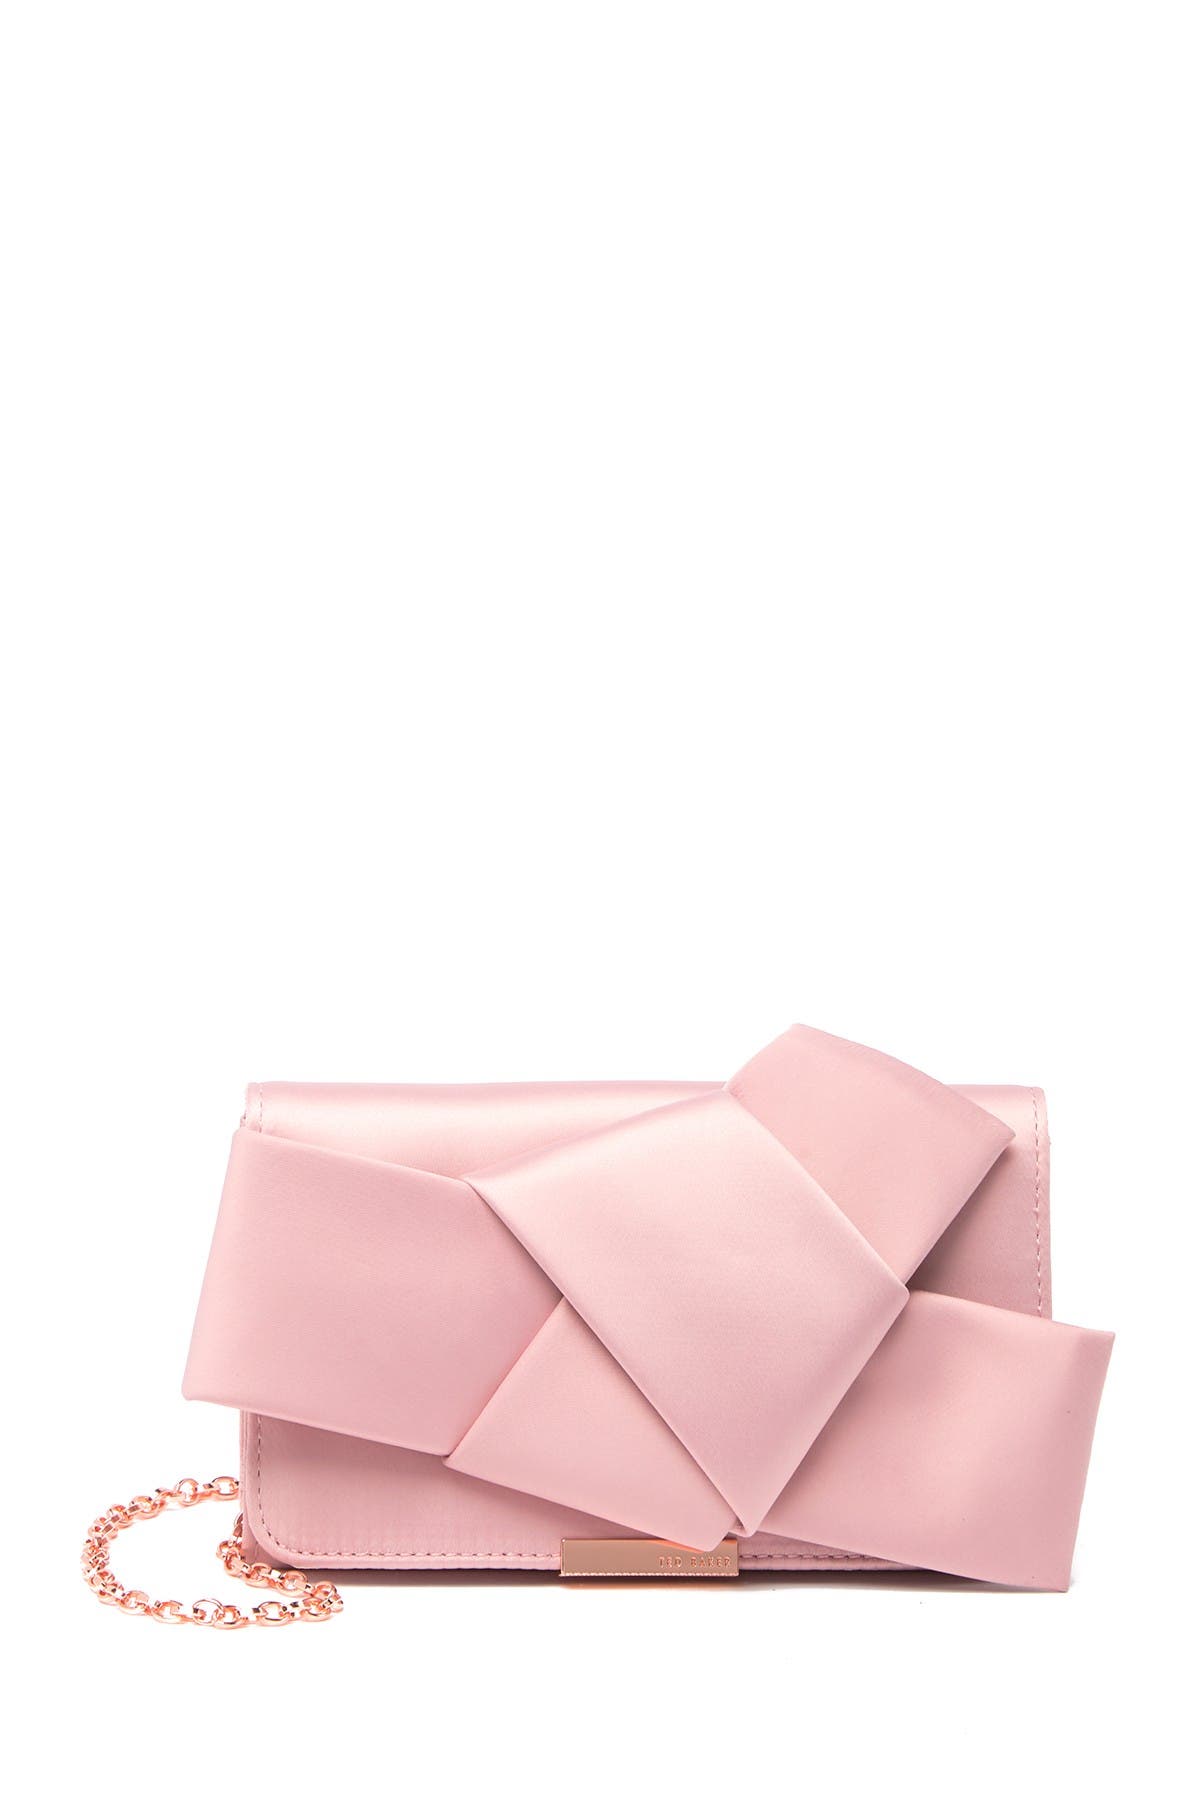 adidas bookbag pink